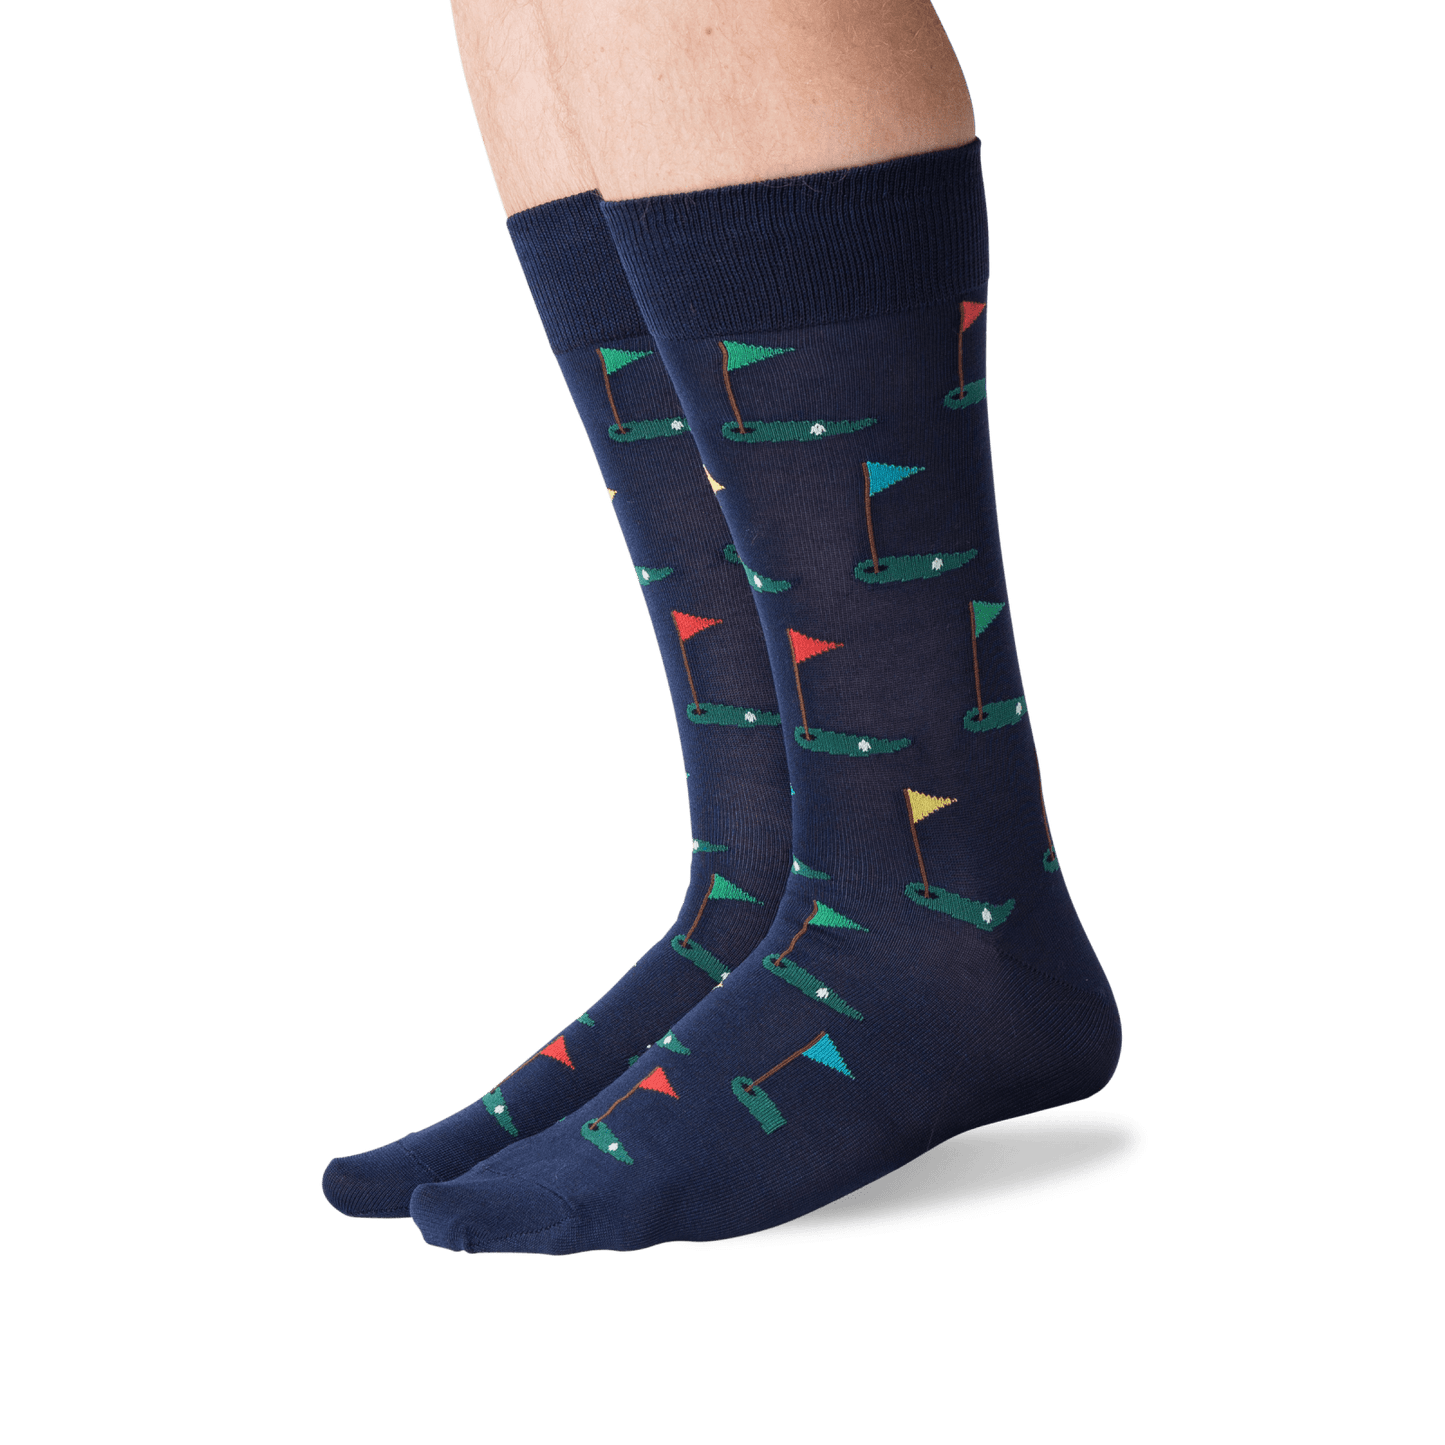 Hot Sox Men's Golf Socks